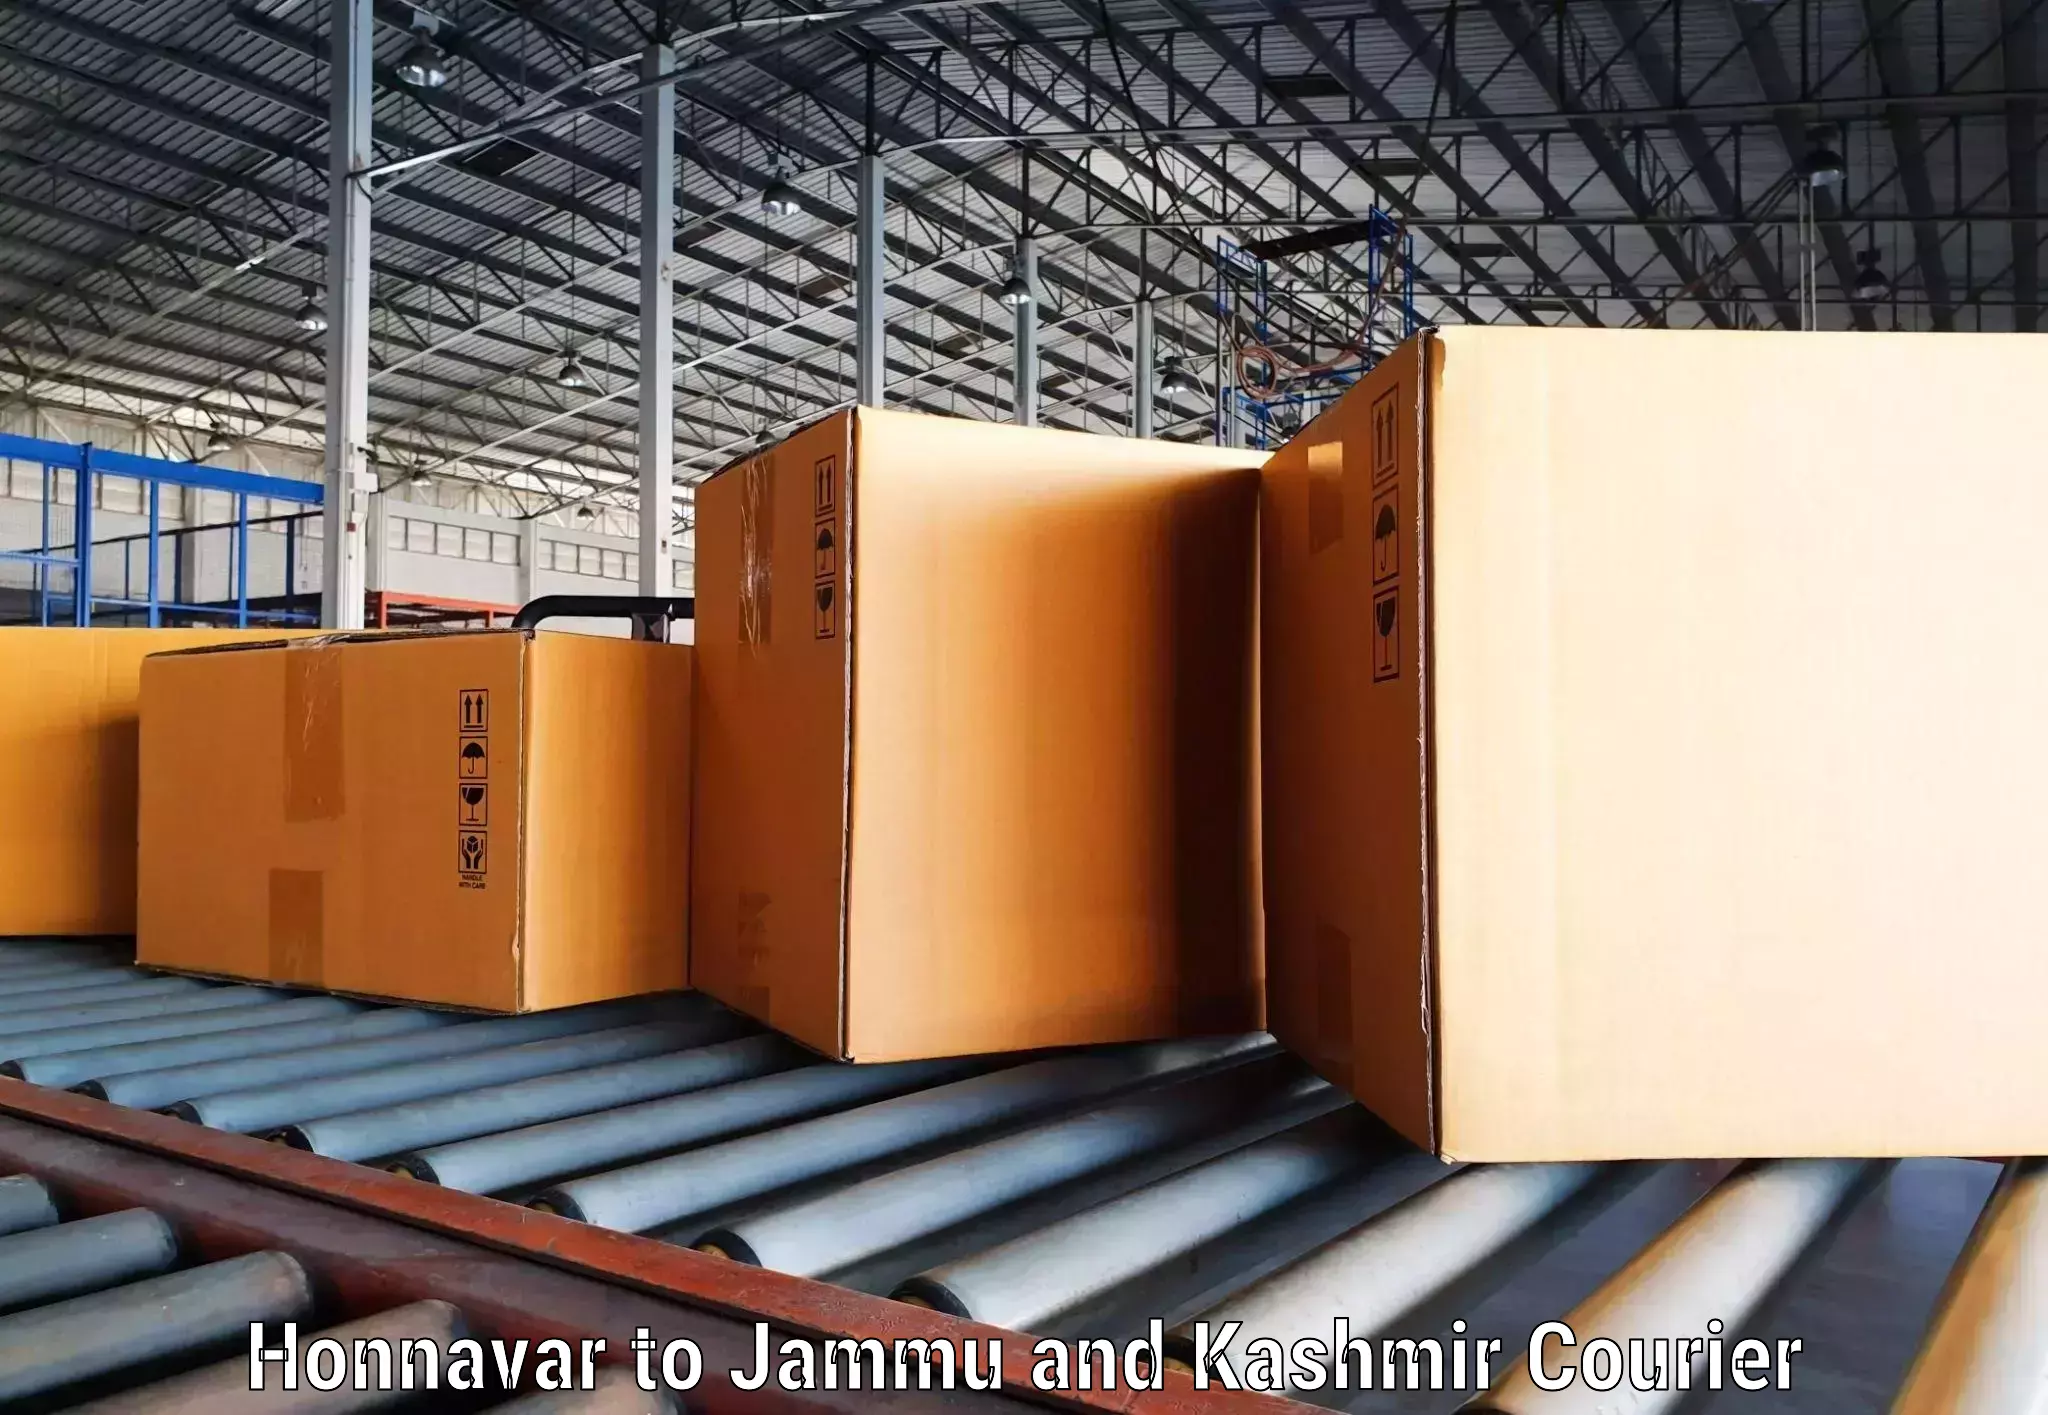 Courier service comparison Honnavar to Srinagar Kashmir